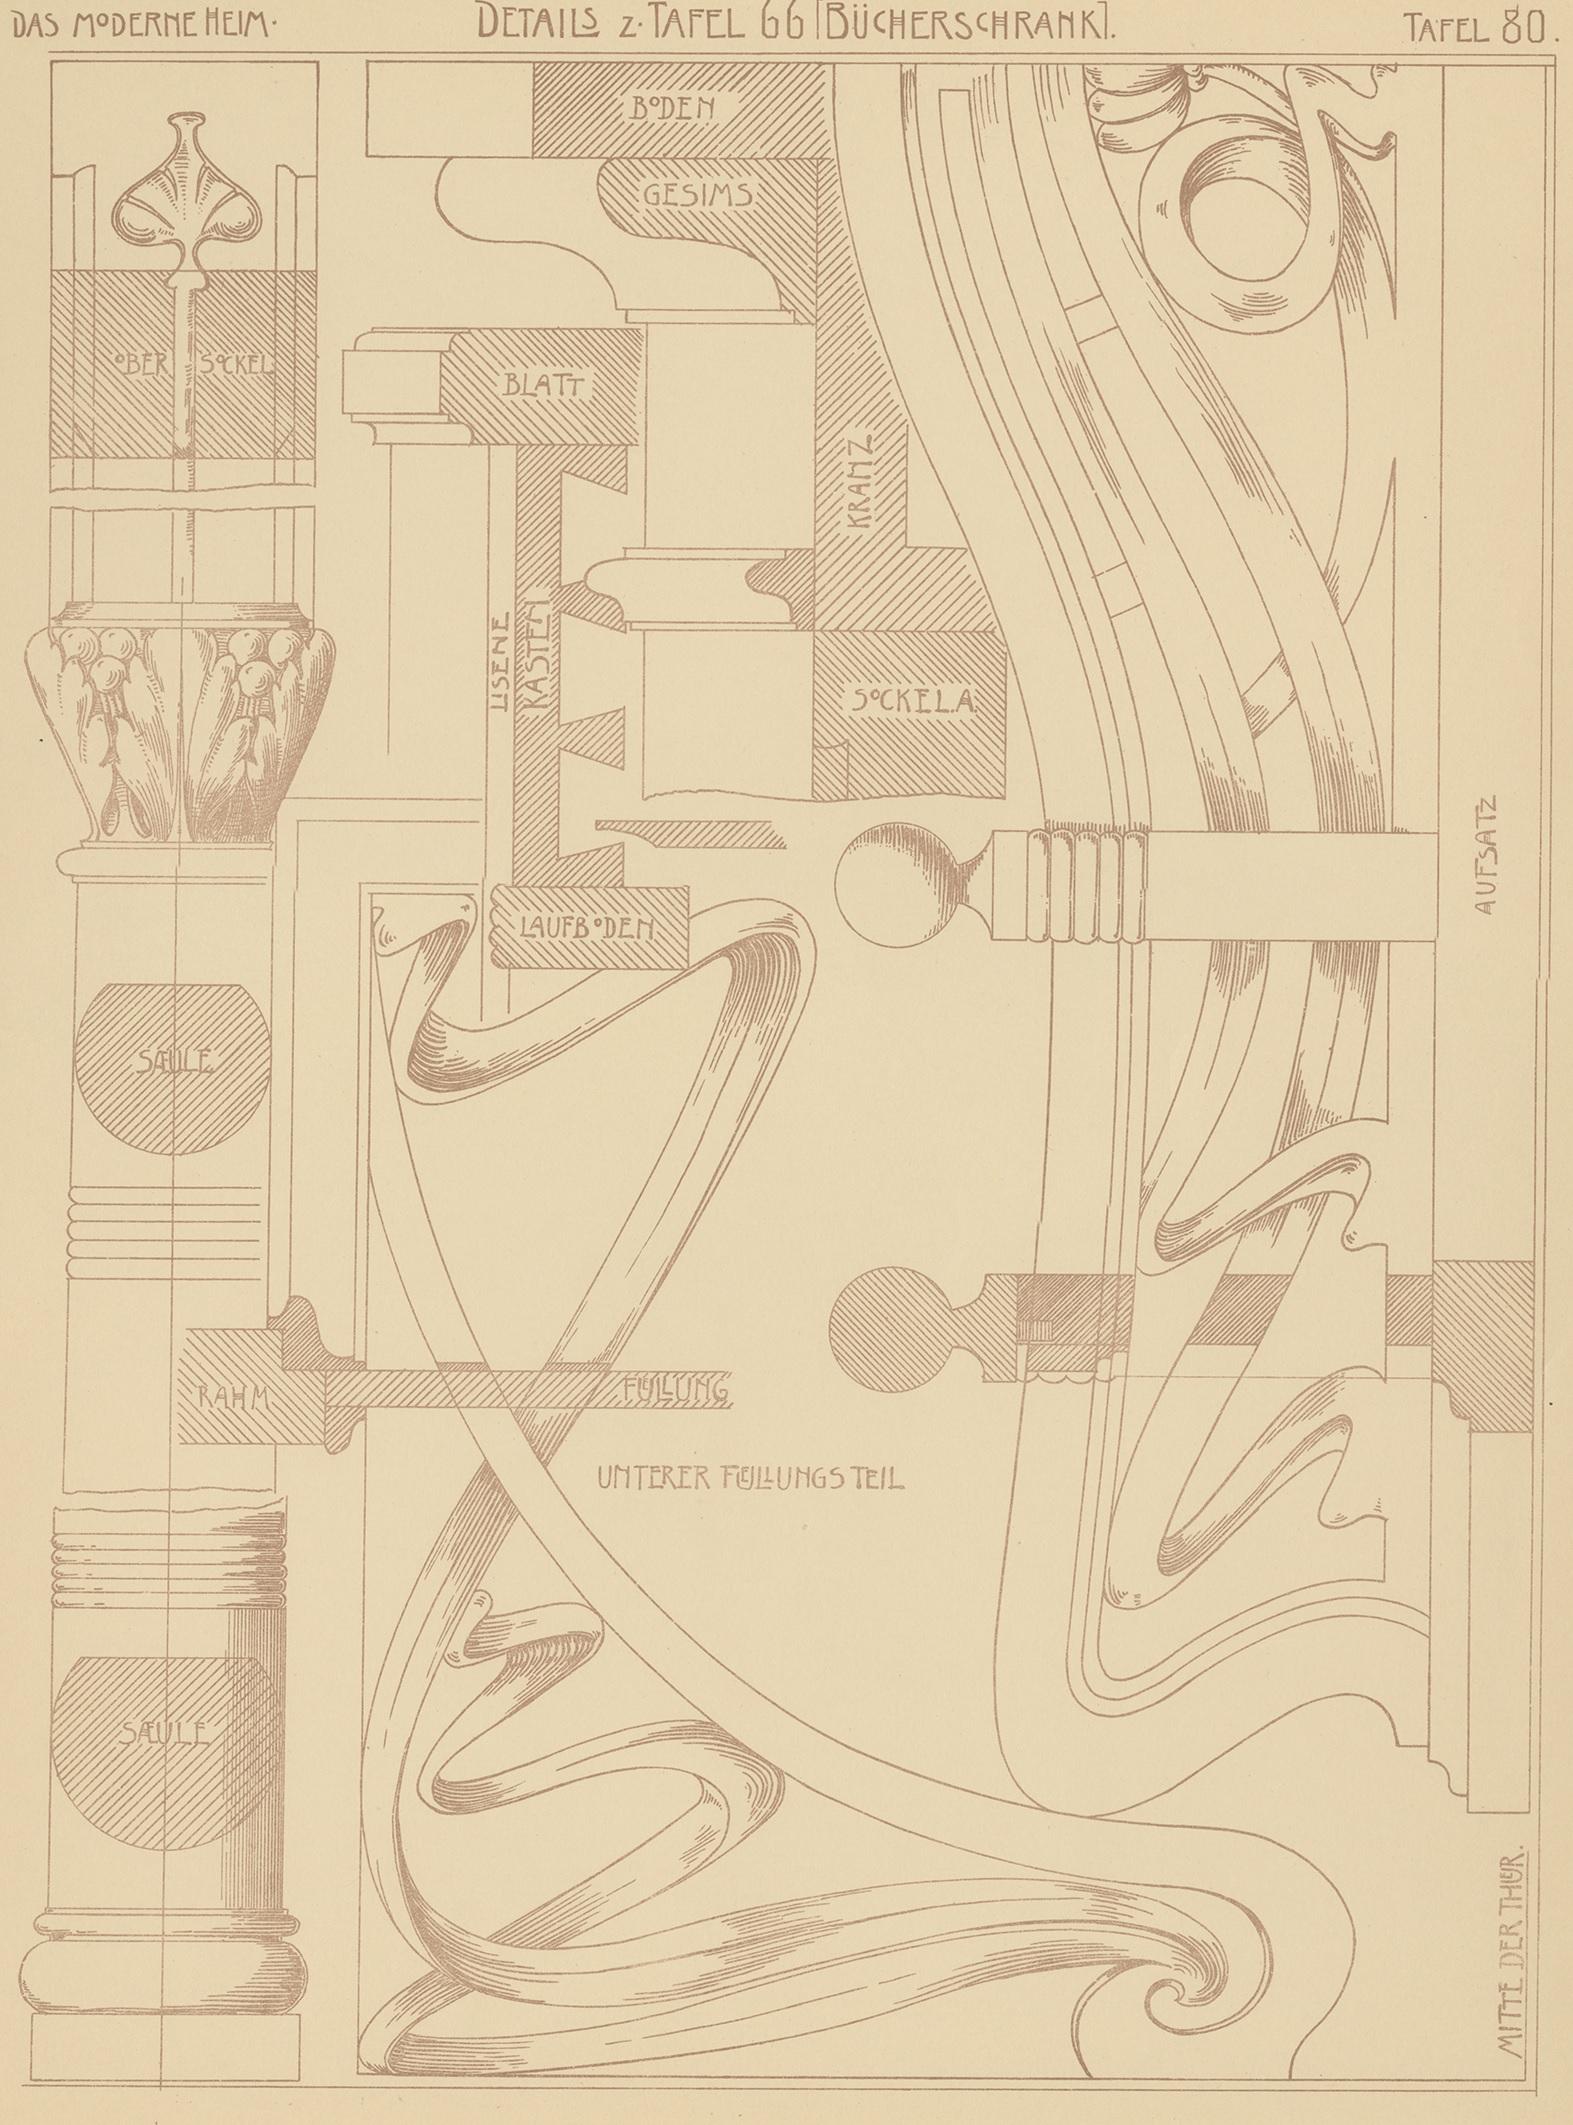 Antique print titled 'Details z. Bücherschrank'. Lithograph of furniture details. This print originates from 'Det Moderna Hemmet' by Johannes Kramer. Published by Ferdinand Hey'l, circa 1910.